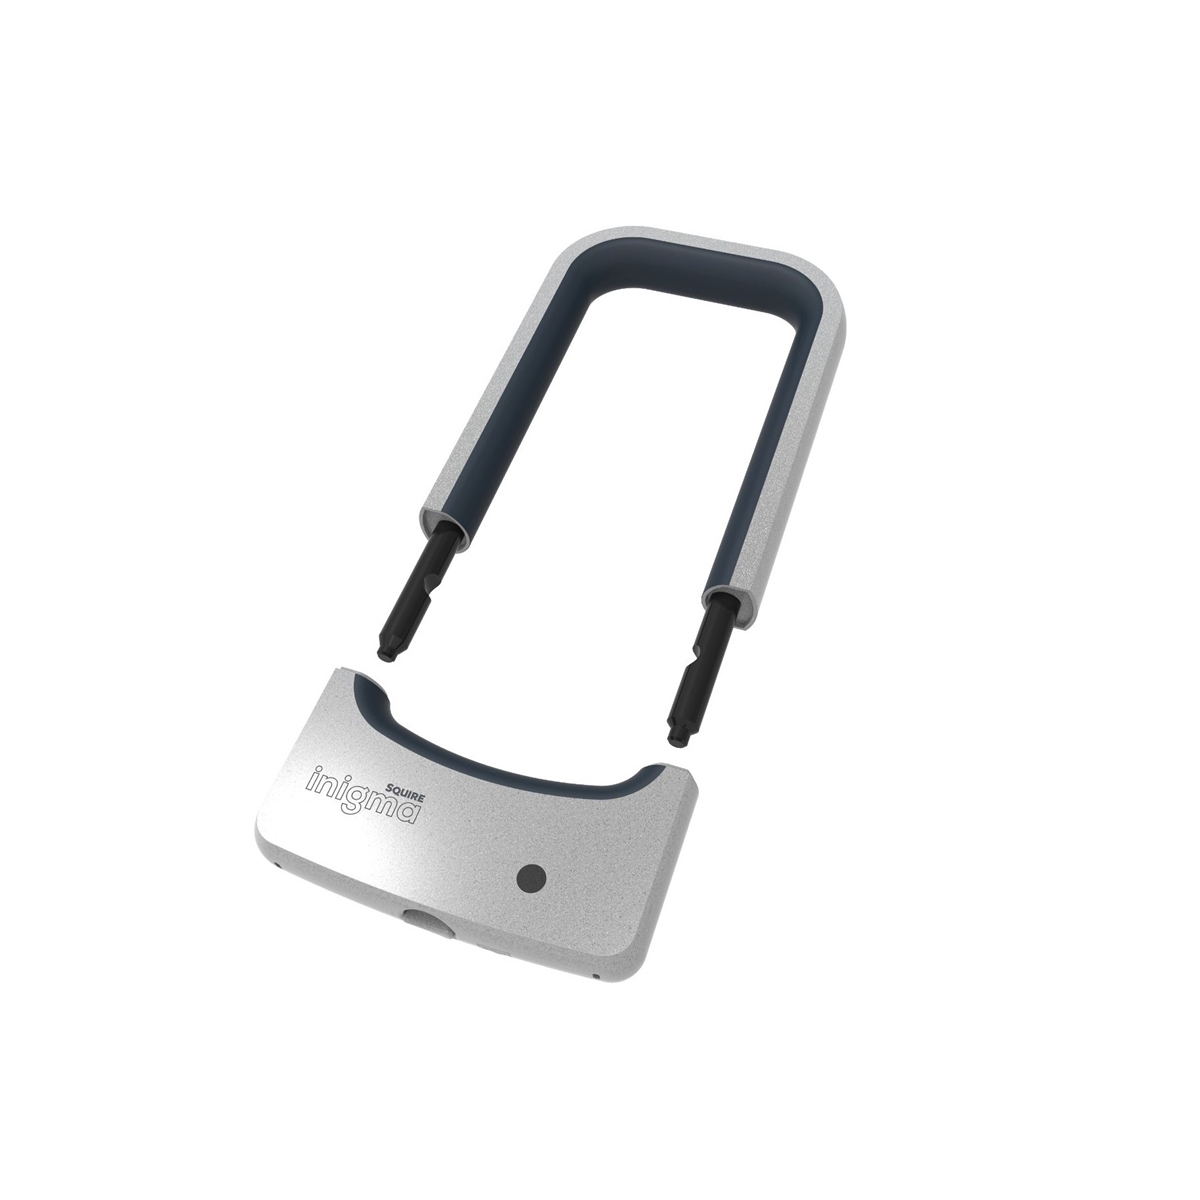 Bluetooth Bikelock Inigma BL1 190mm open / closure with Smartphone